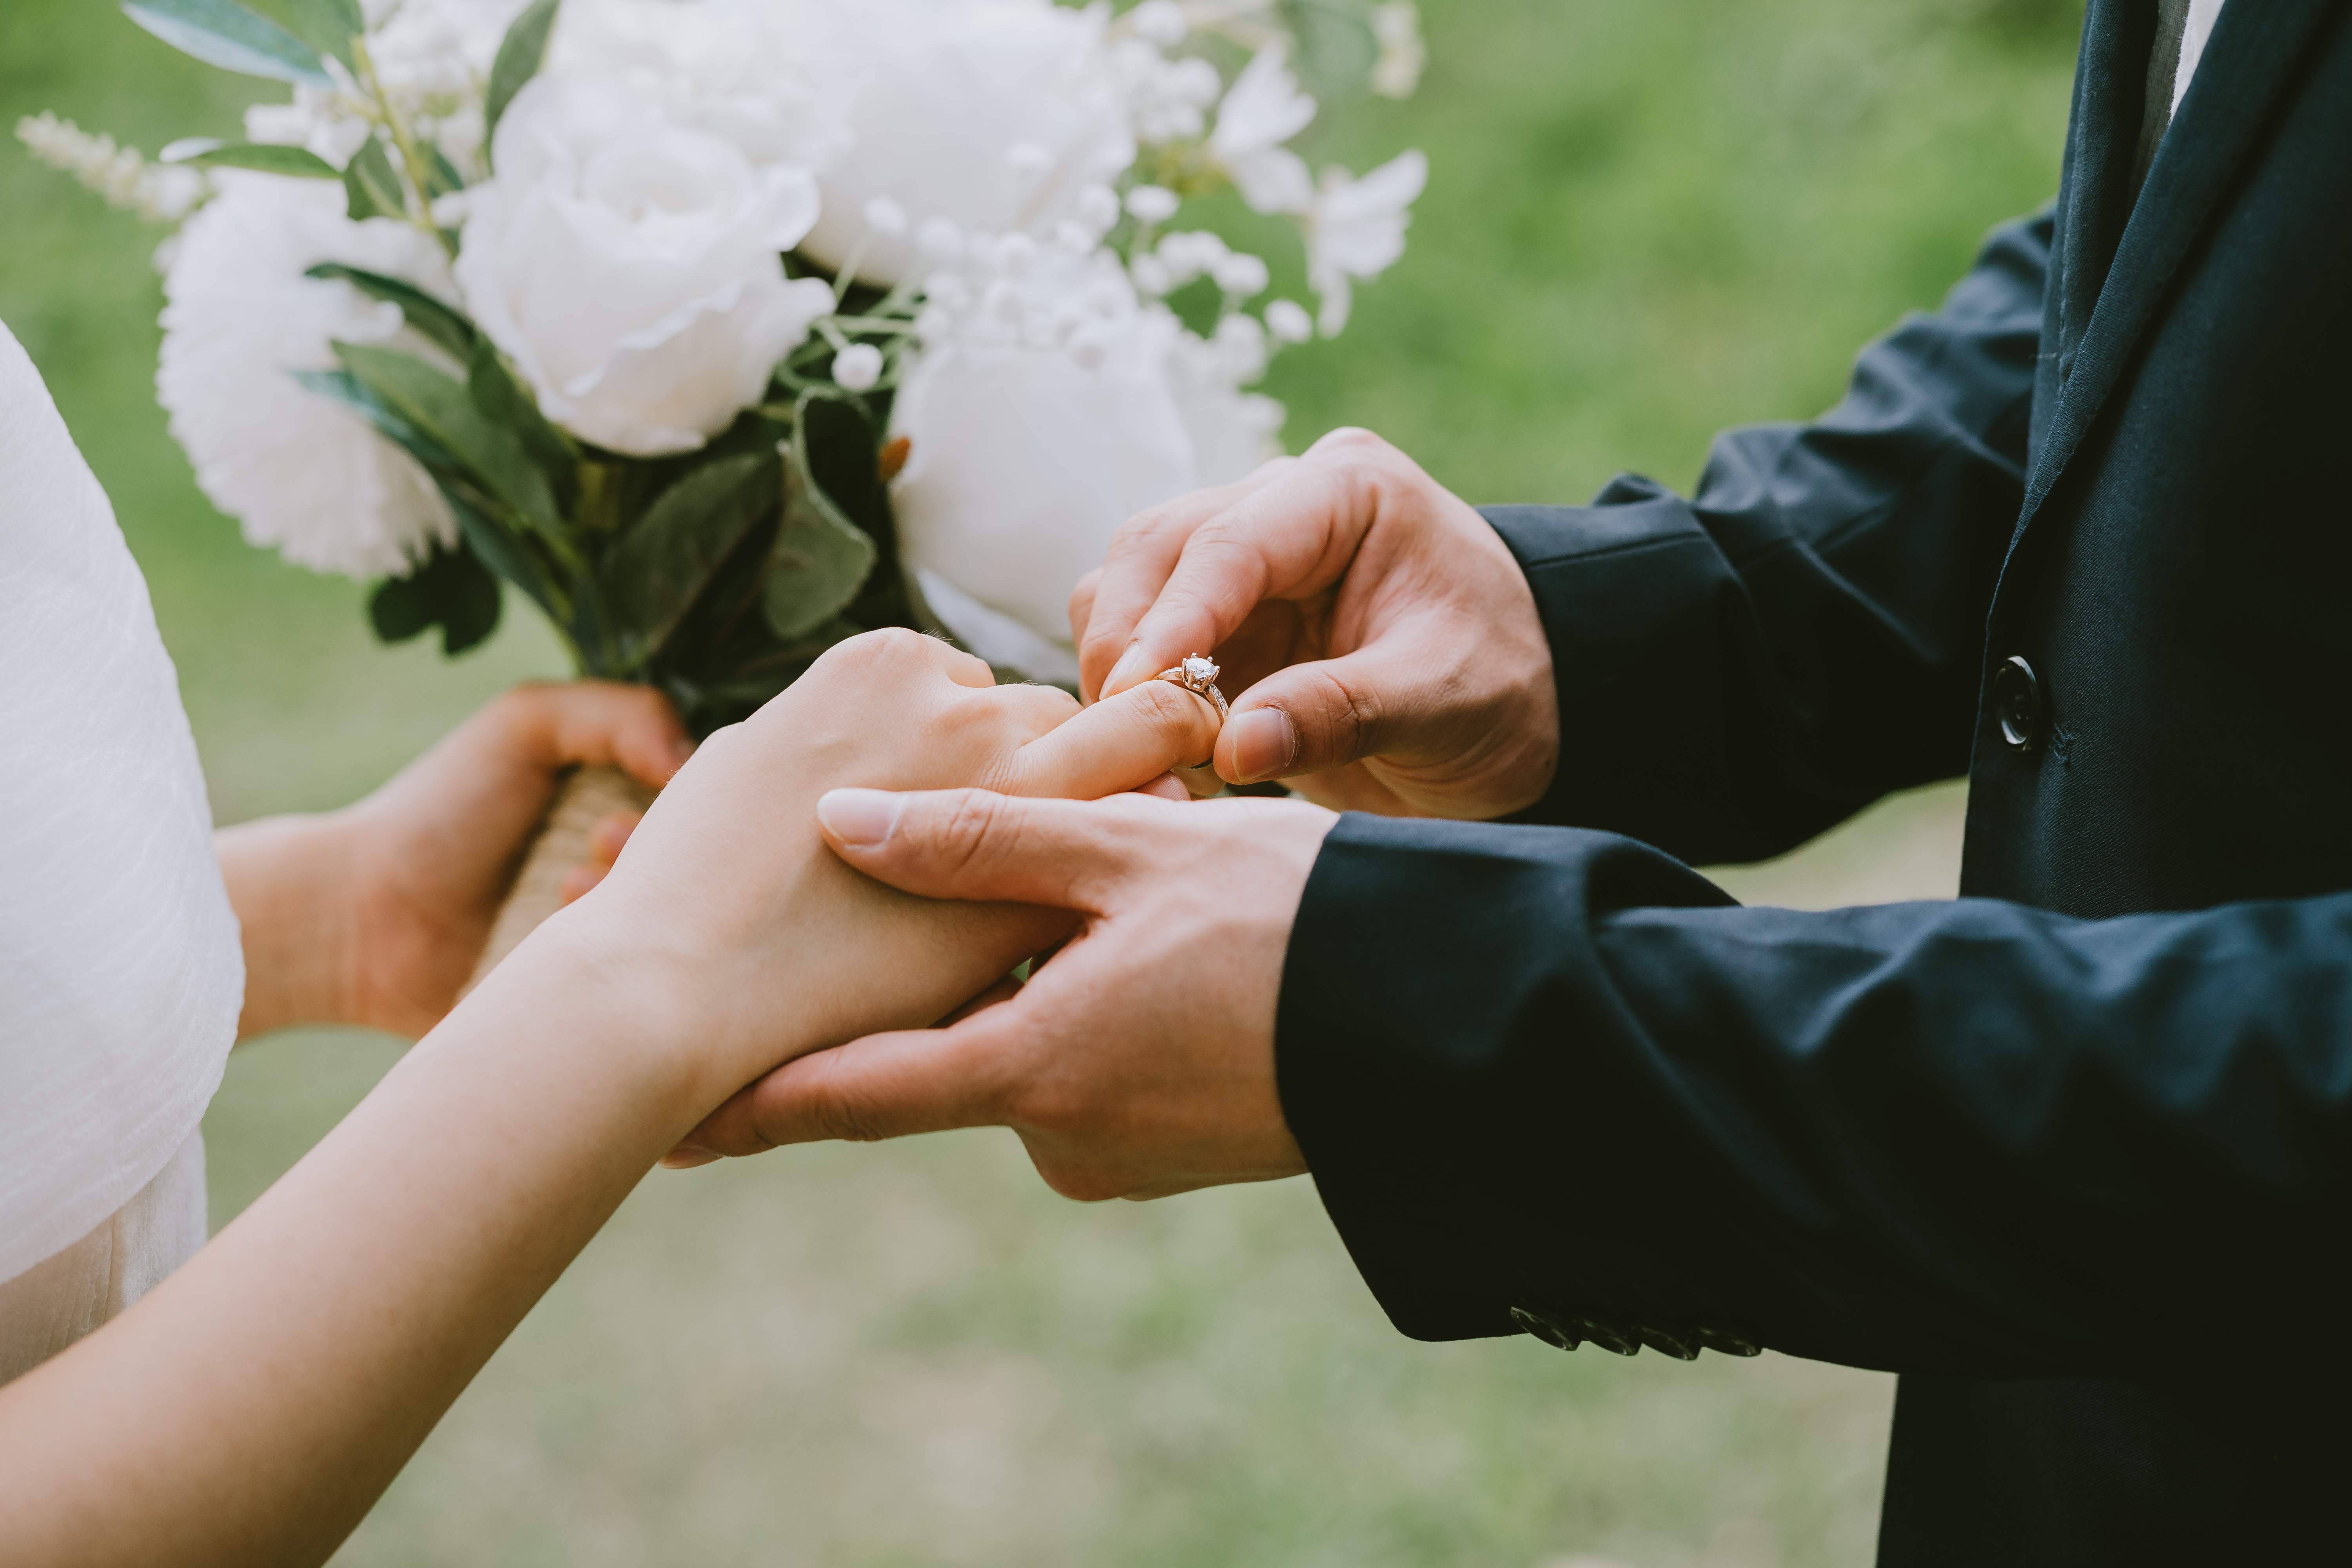 Mann steckt seiner Verlobten einen Ring an den Finger | Quelle: Shutterstock